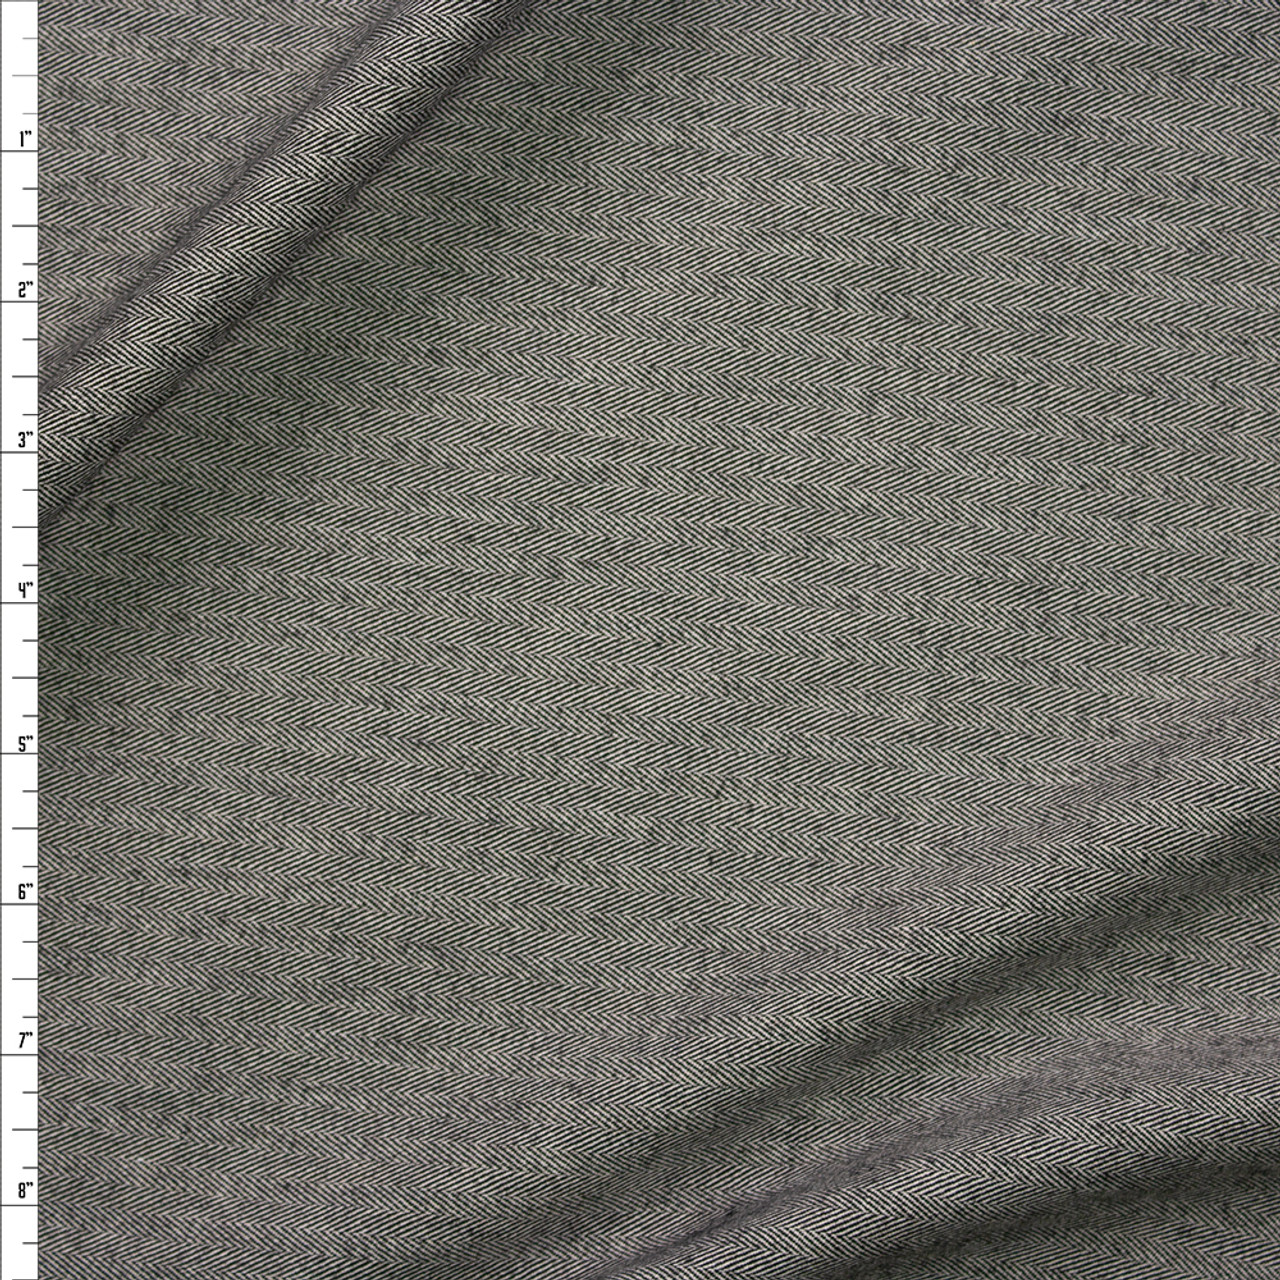 Cali Fabrics Warm Grey Herringbone Brushed Wool Suiting Fabric by the Yard